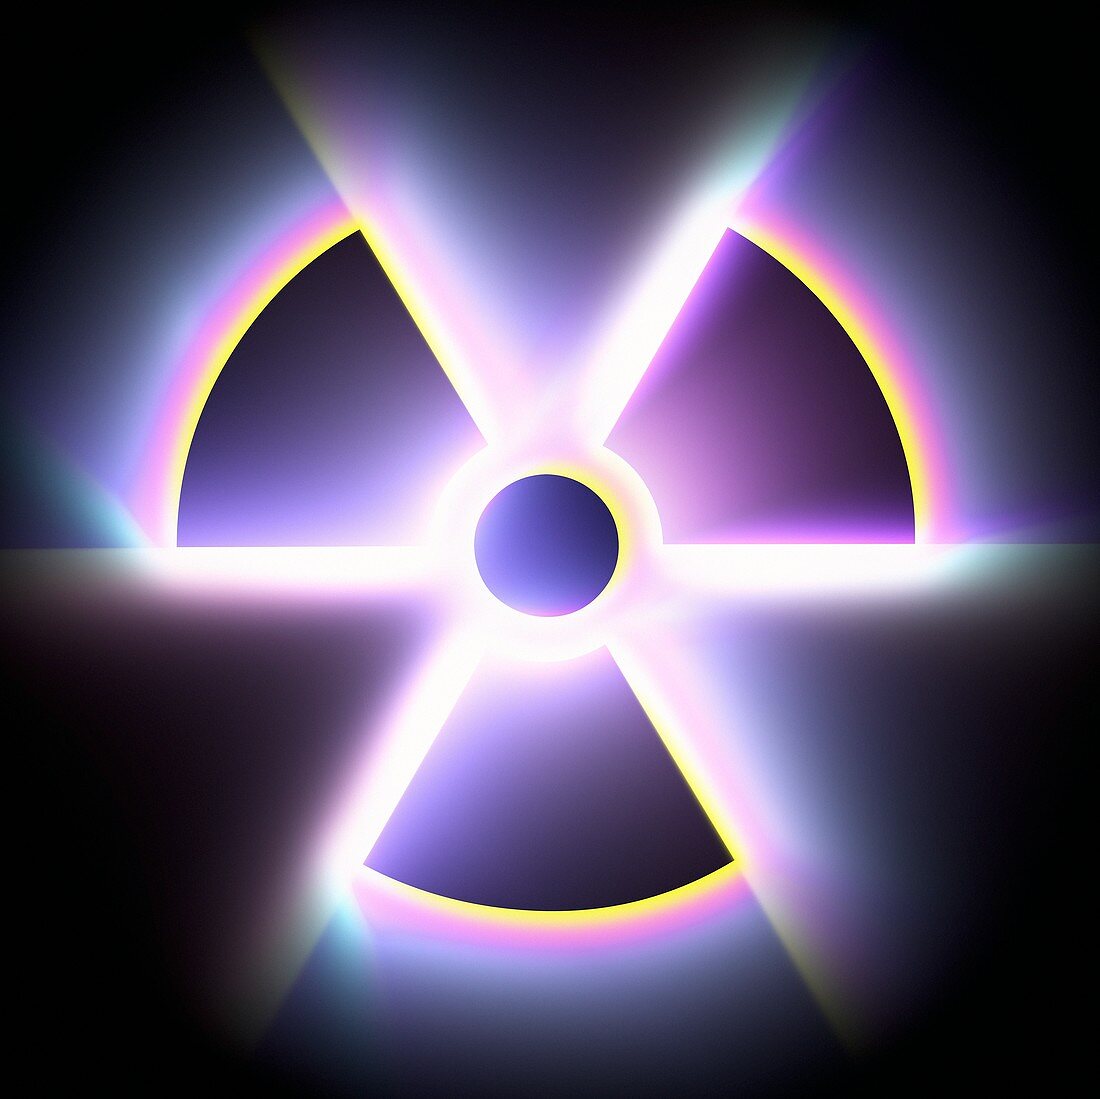 Radiation warning sign